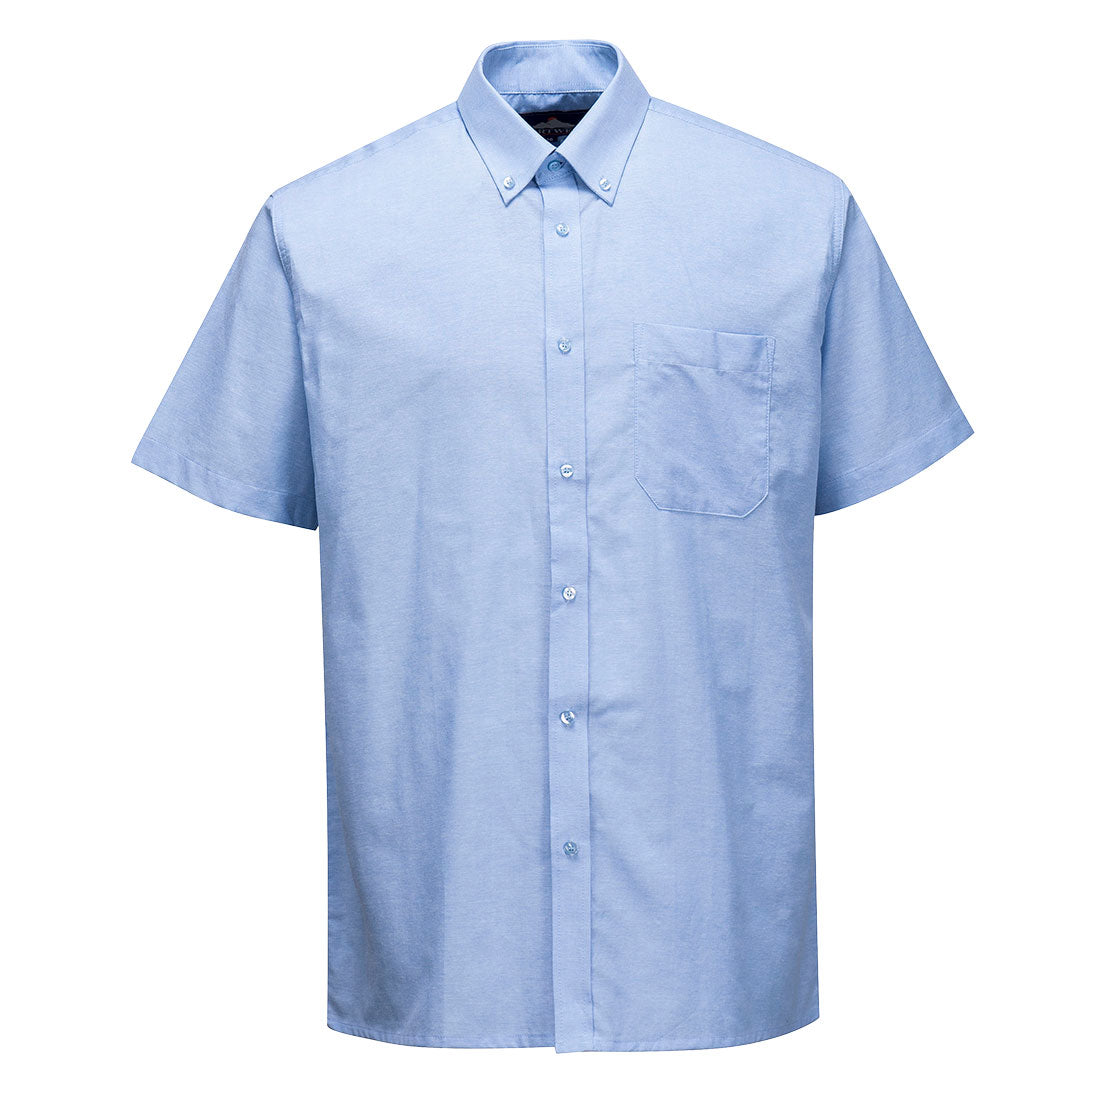 Portwest Easycare Oxford Shirt, Short Sleeves